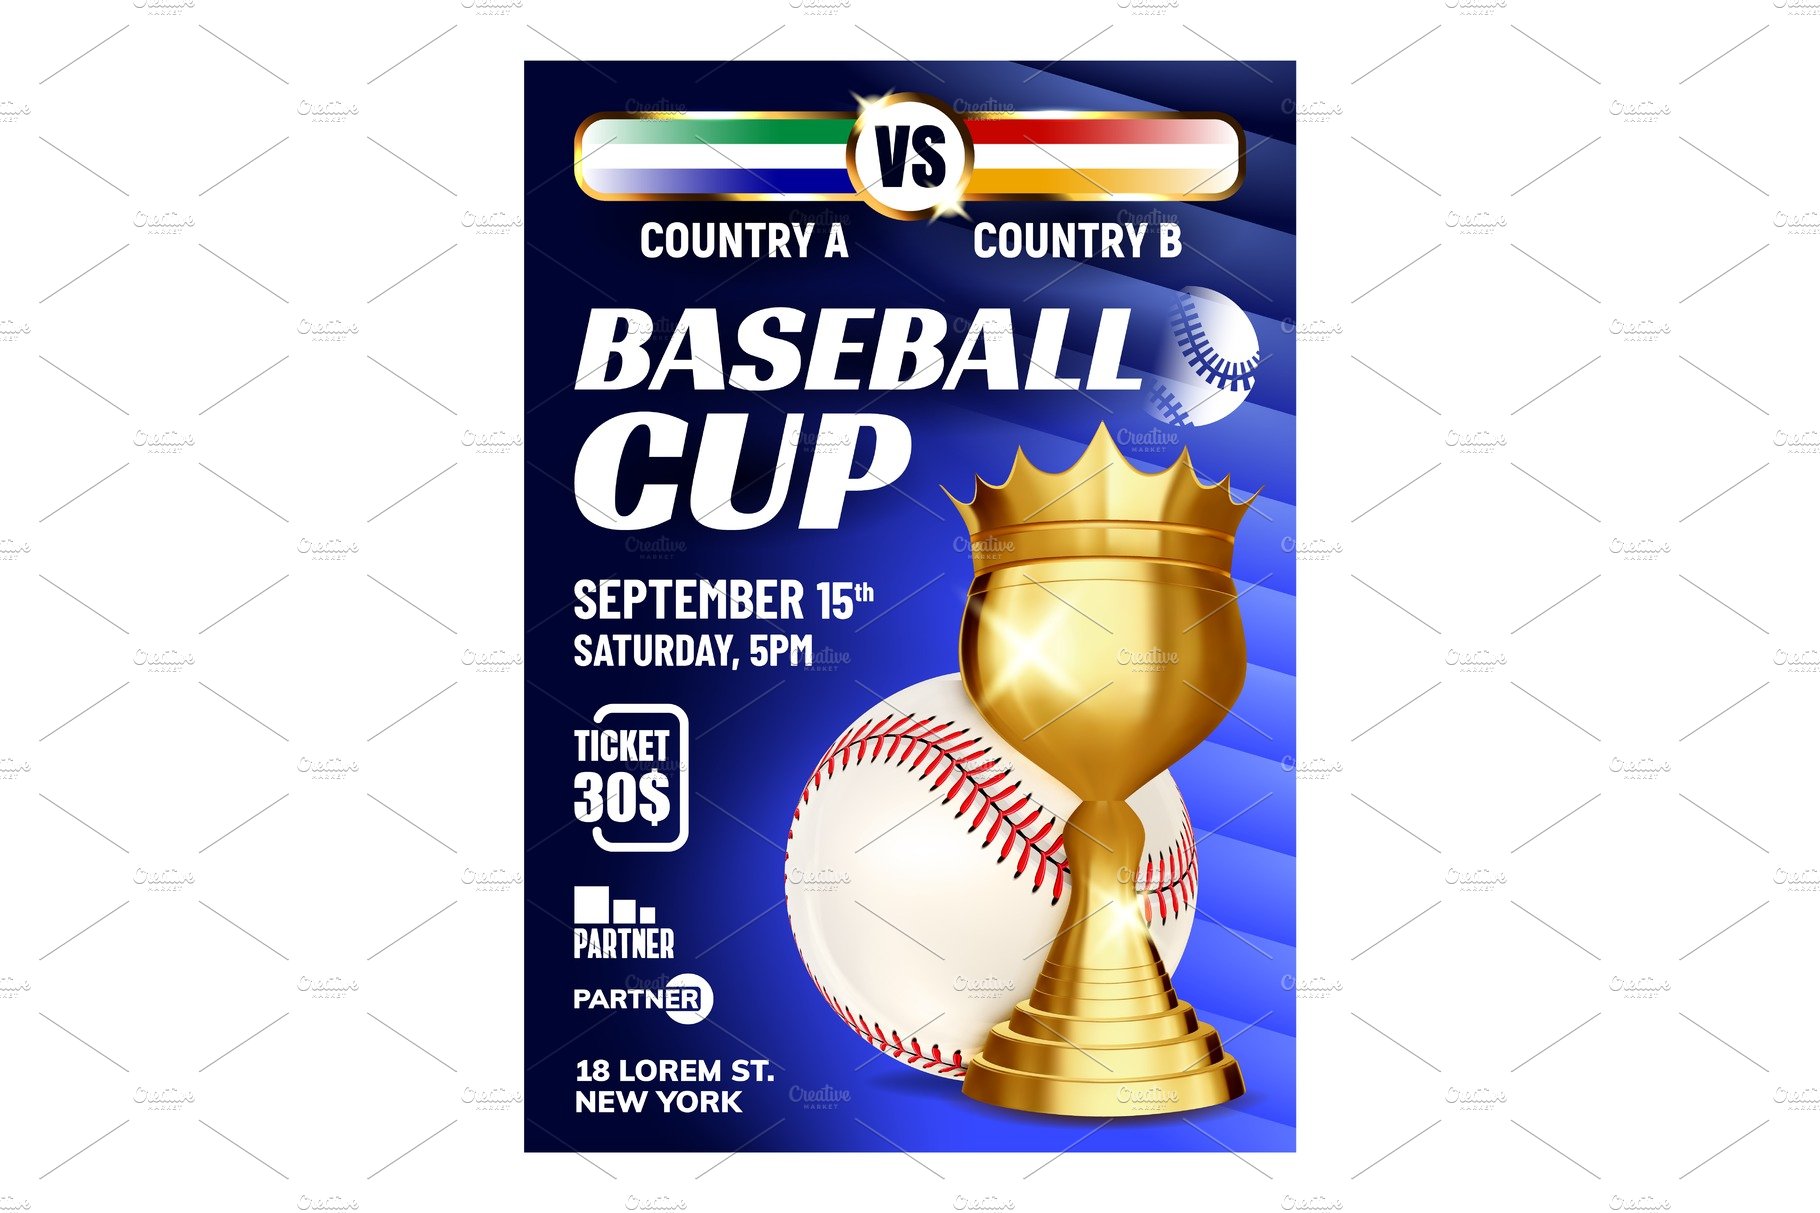 Baseball Champion World Series Cup cover image.